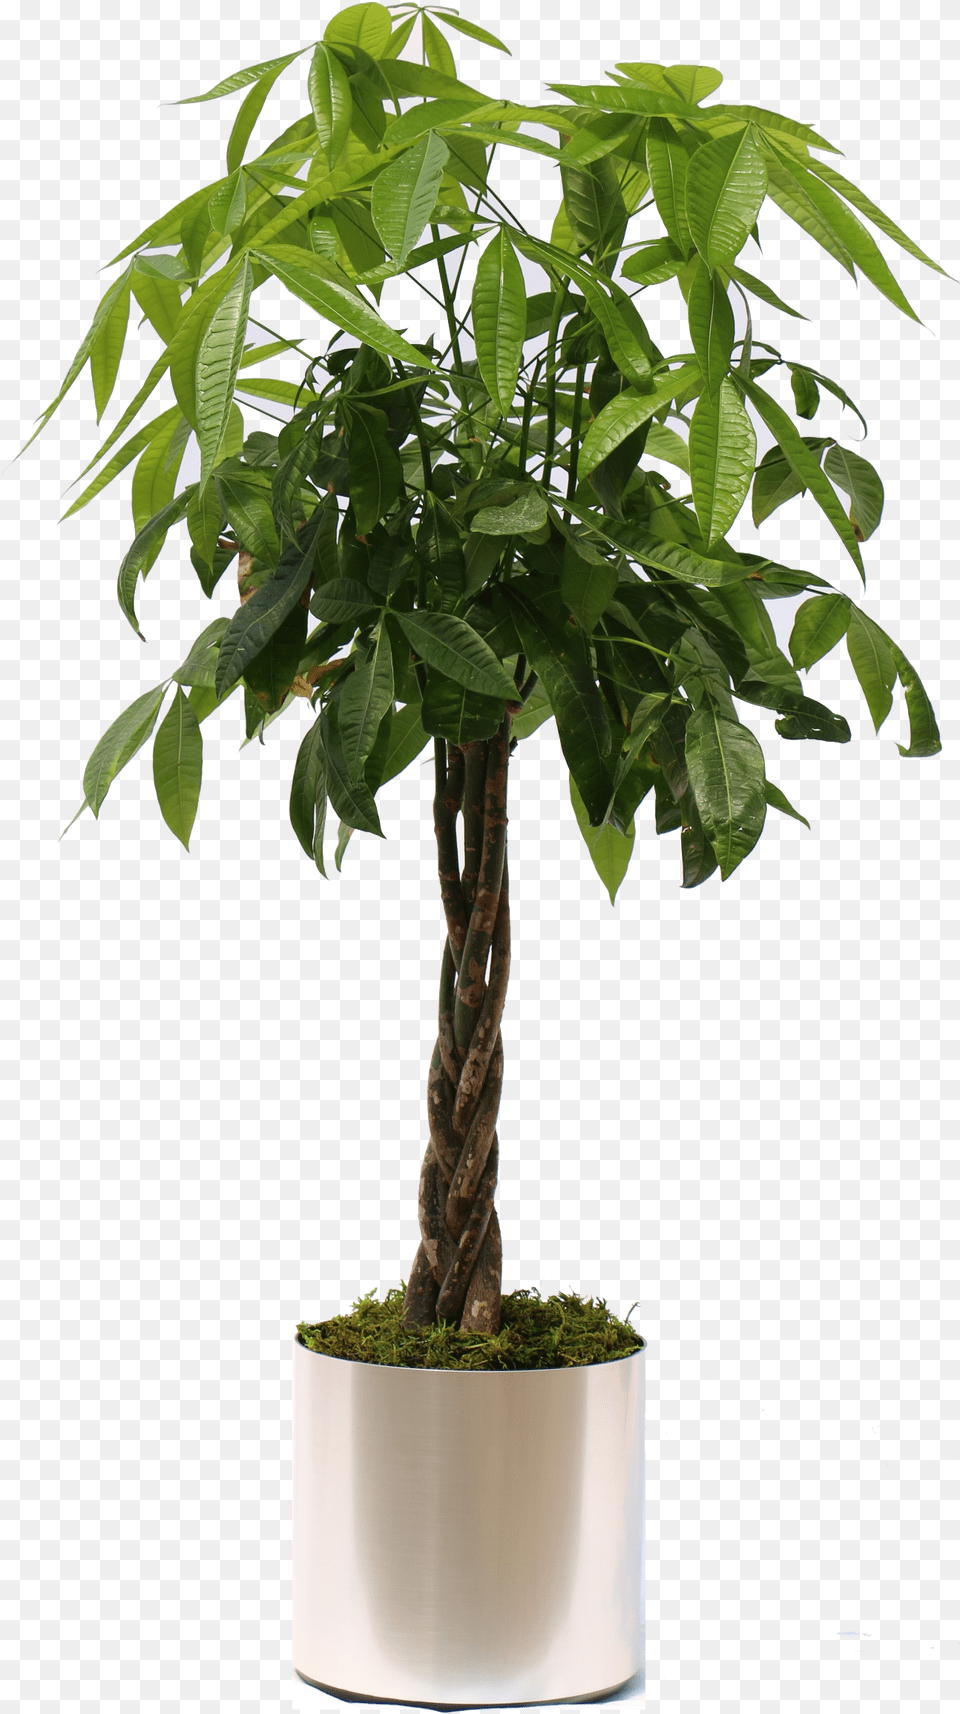 Moneytree Brshdchrome Money Tree Plant Leaf, Potted Plant, Jar, Planter Free Transparent Png